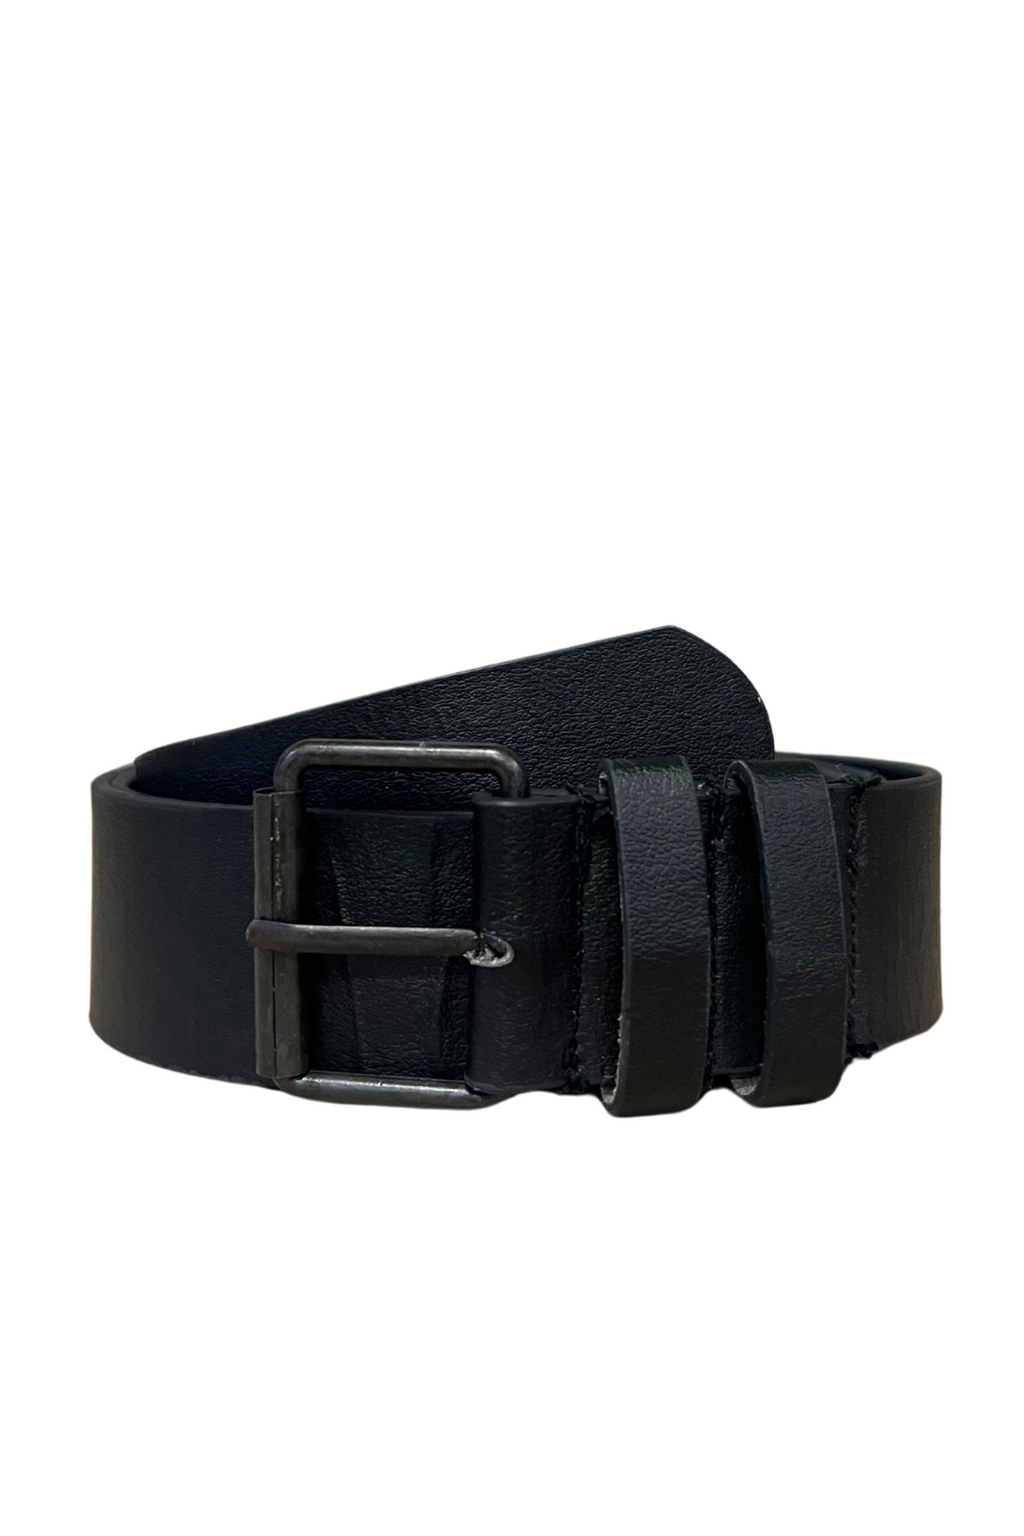 Multi Flex Belt - Black